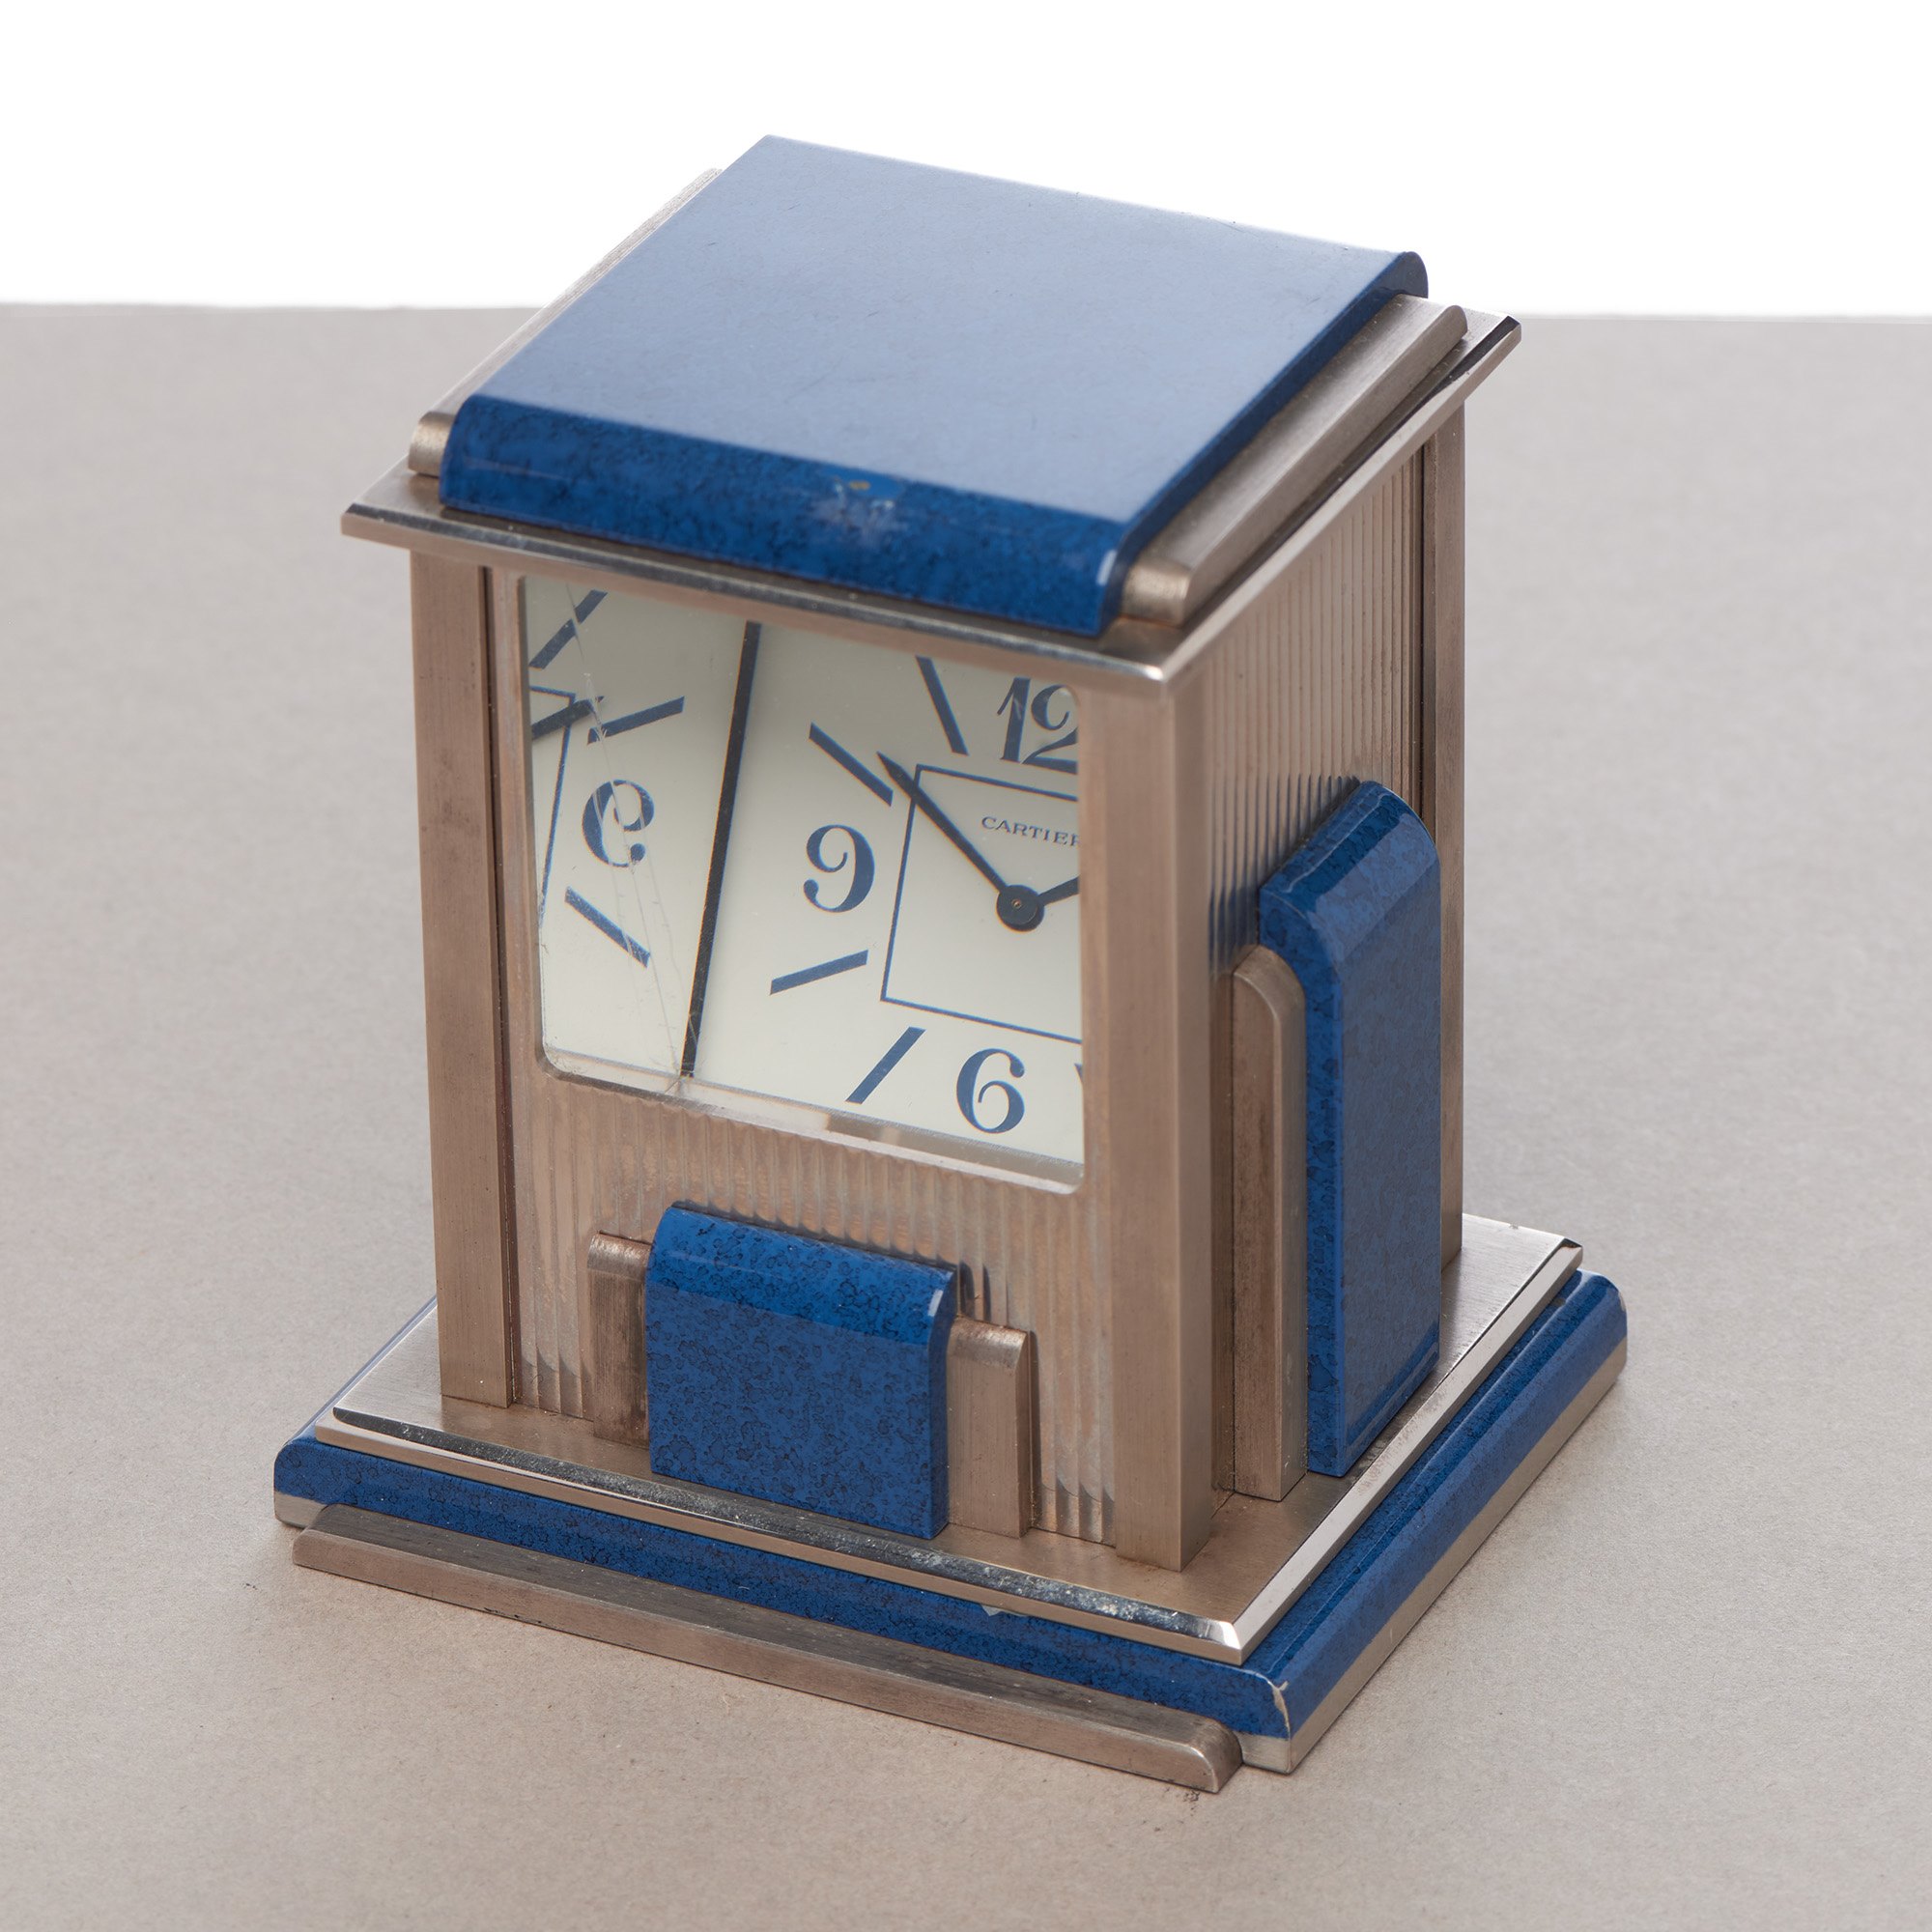 Travel Desk Clock Cartier Paris 'Mystery' Silver Plated Double Desk Clock 9118 - Image 3 of 11